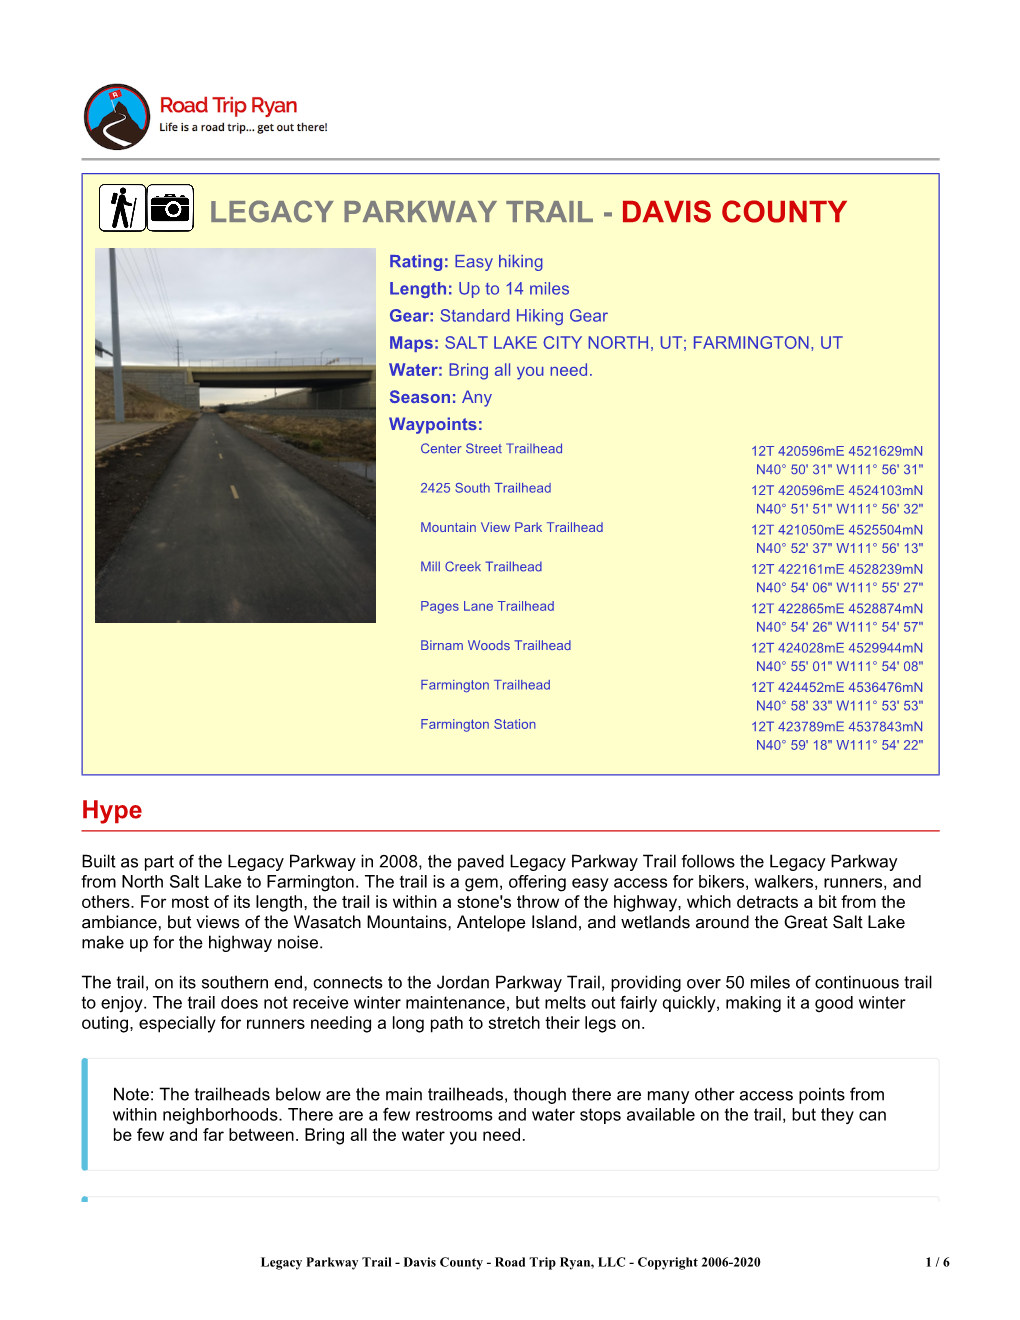 Legacy Parkway Trail - Davis County